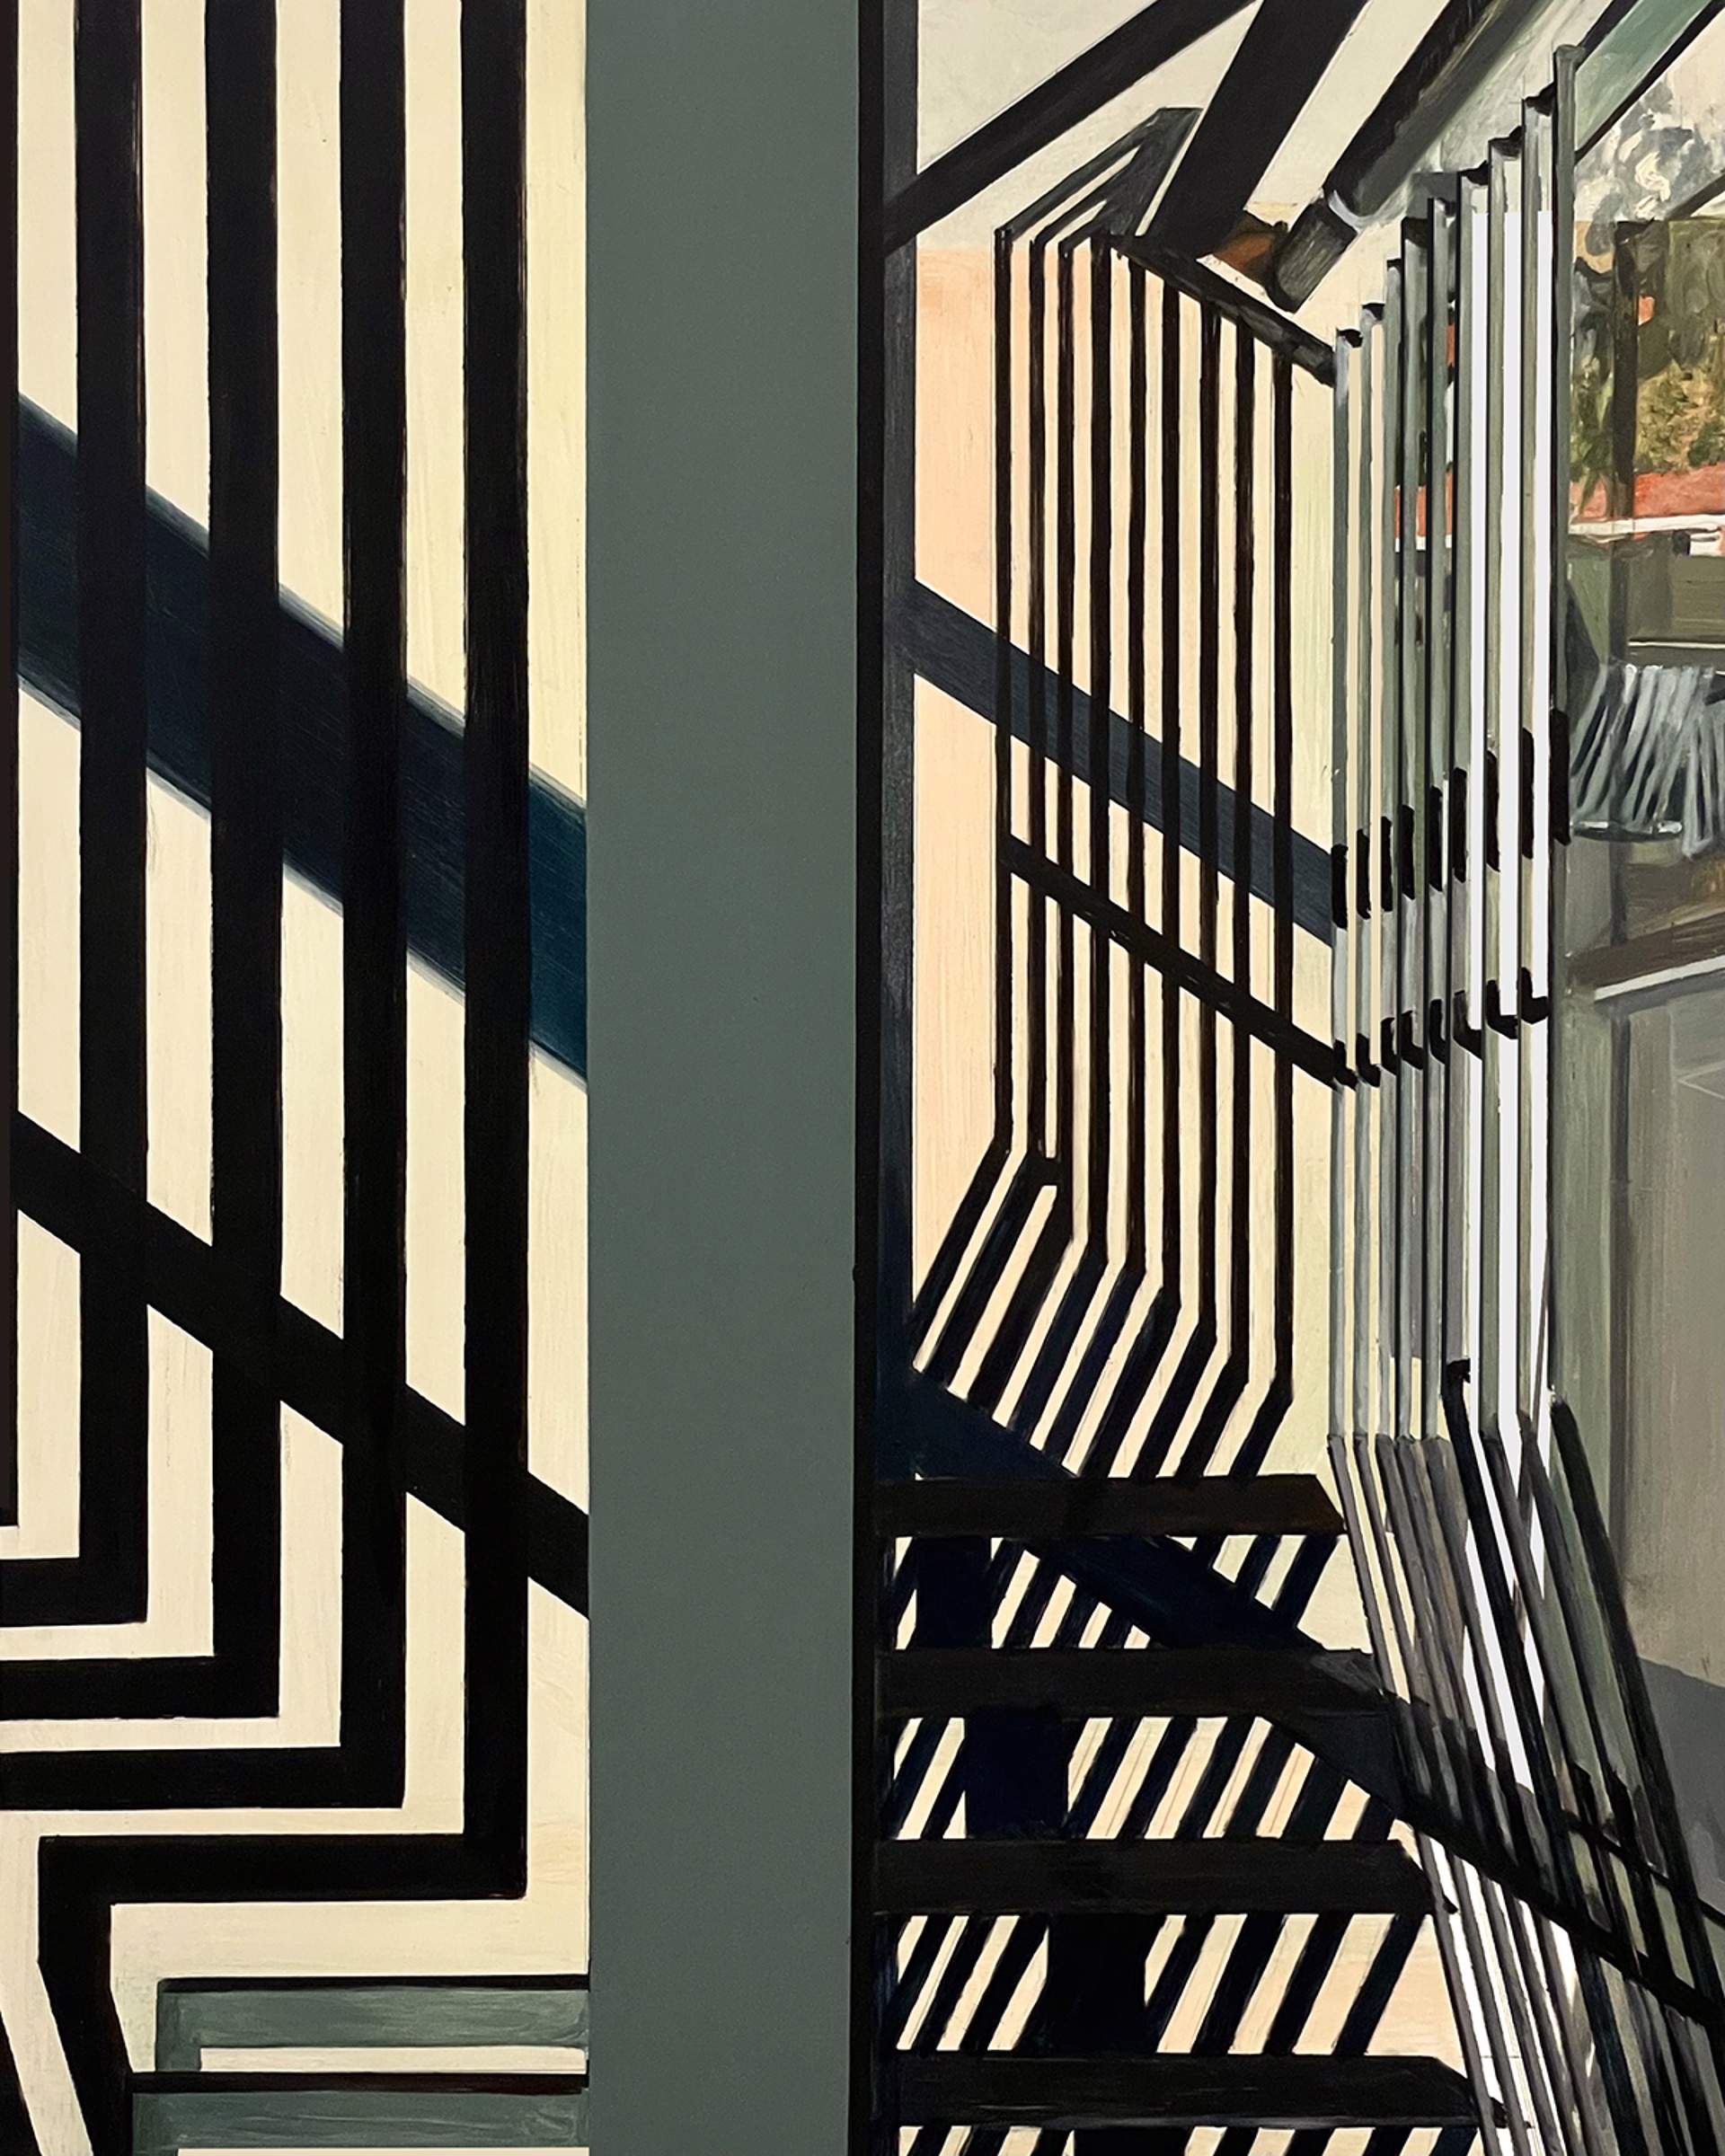 Shadows in a Stairwell by Allan Gorman